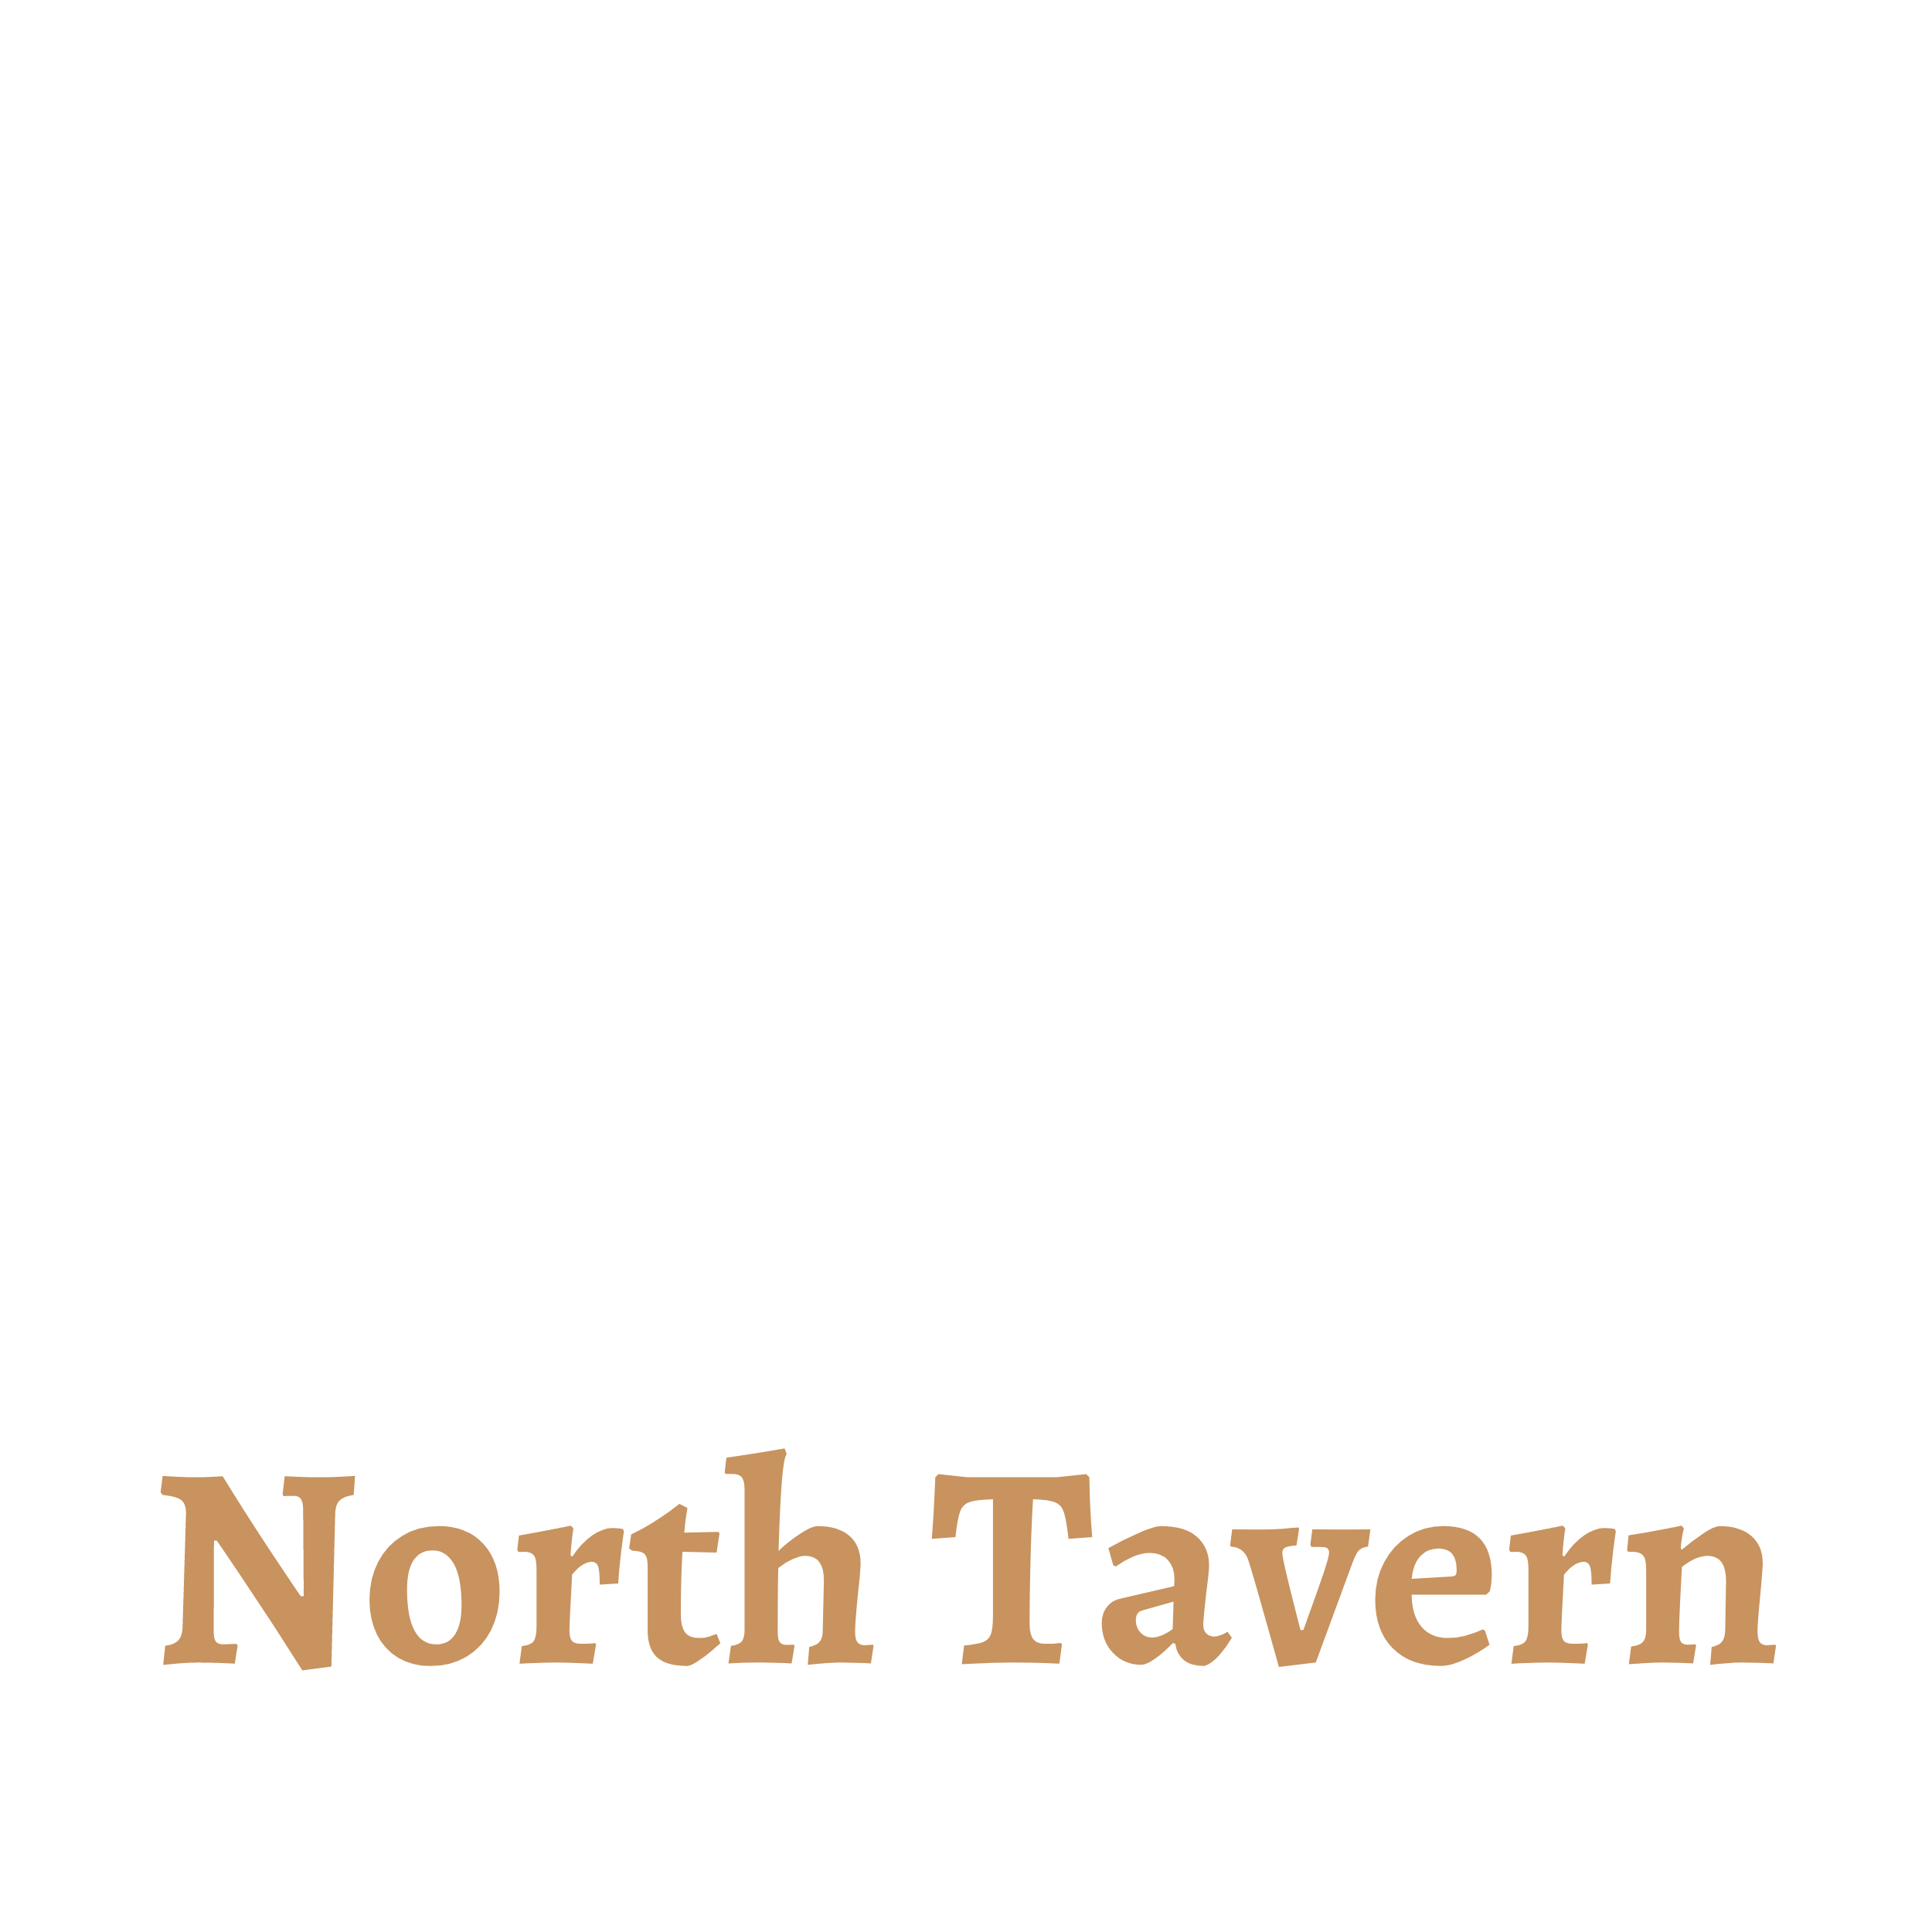 https://northtavern.com/wp-content/uploads/2023/04/north-tavern-logo-1.png